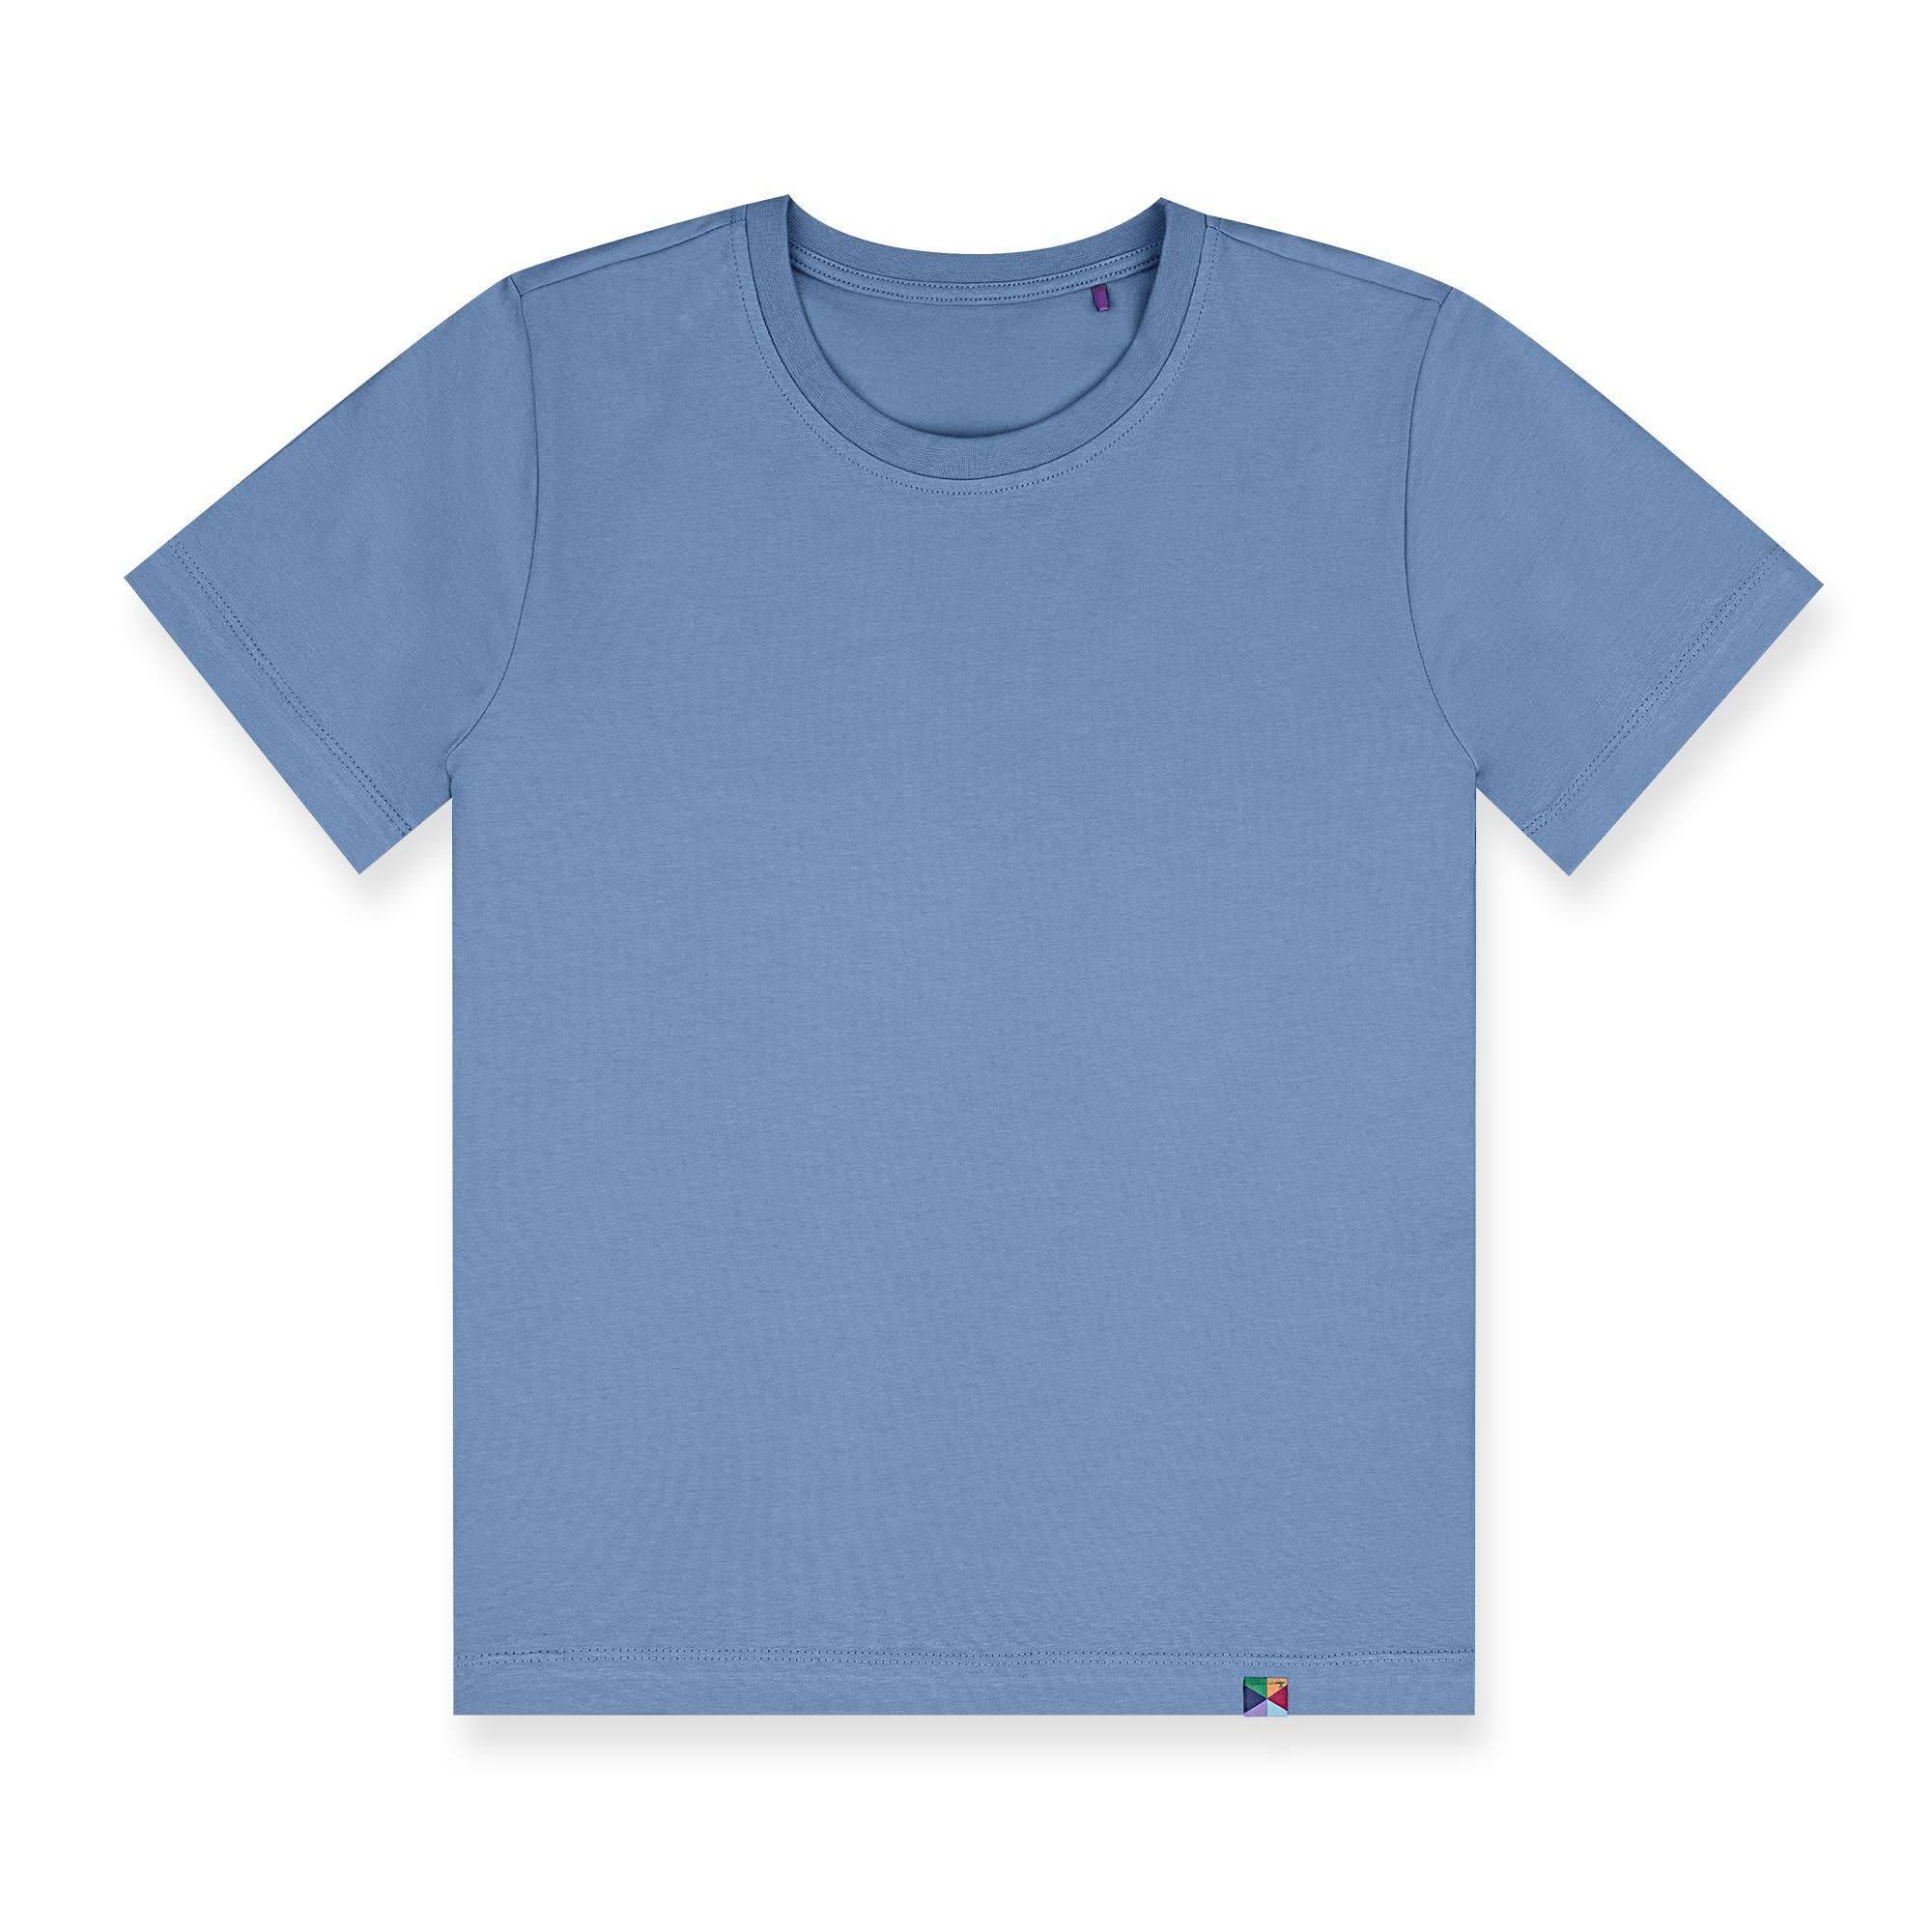 Błękitna koszulka ze ściągaczem damska